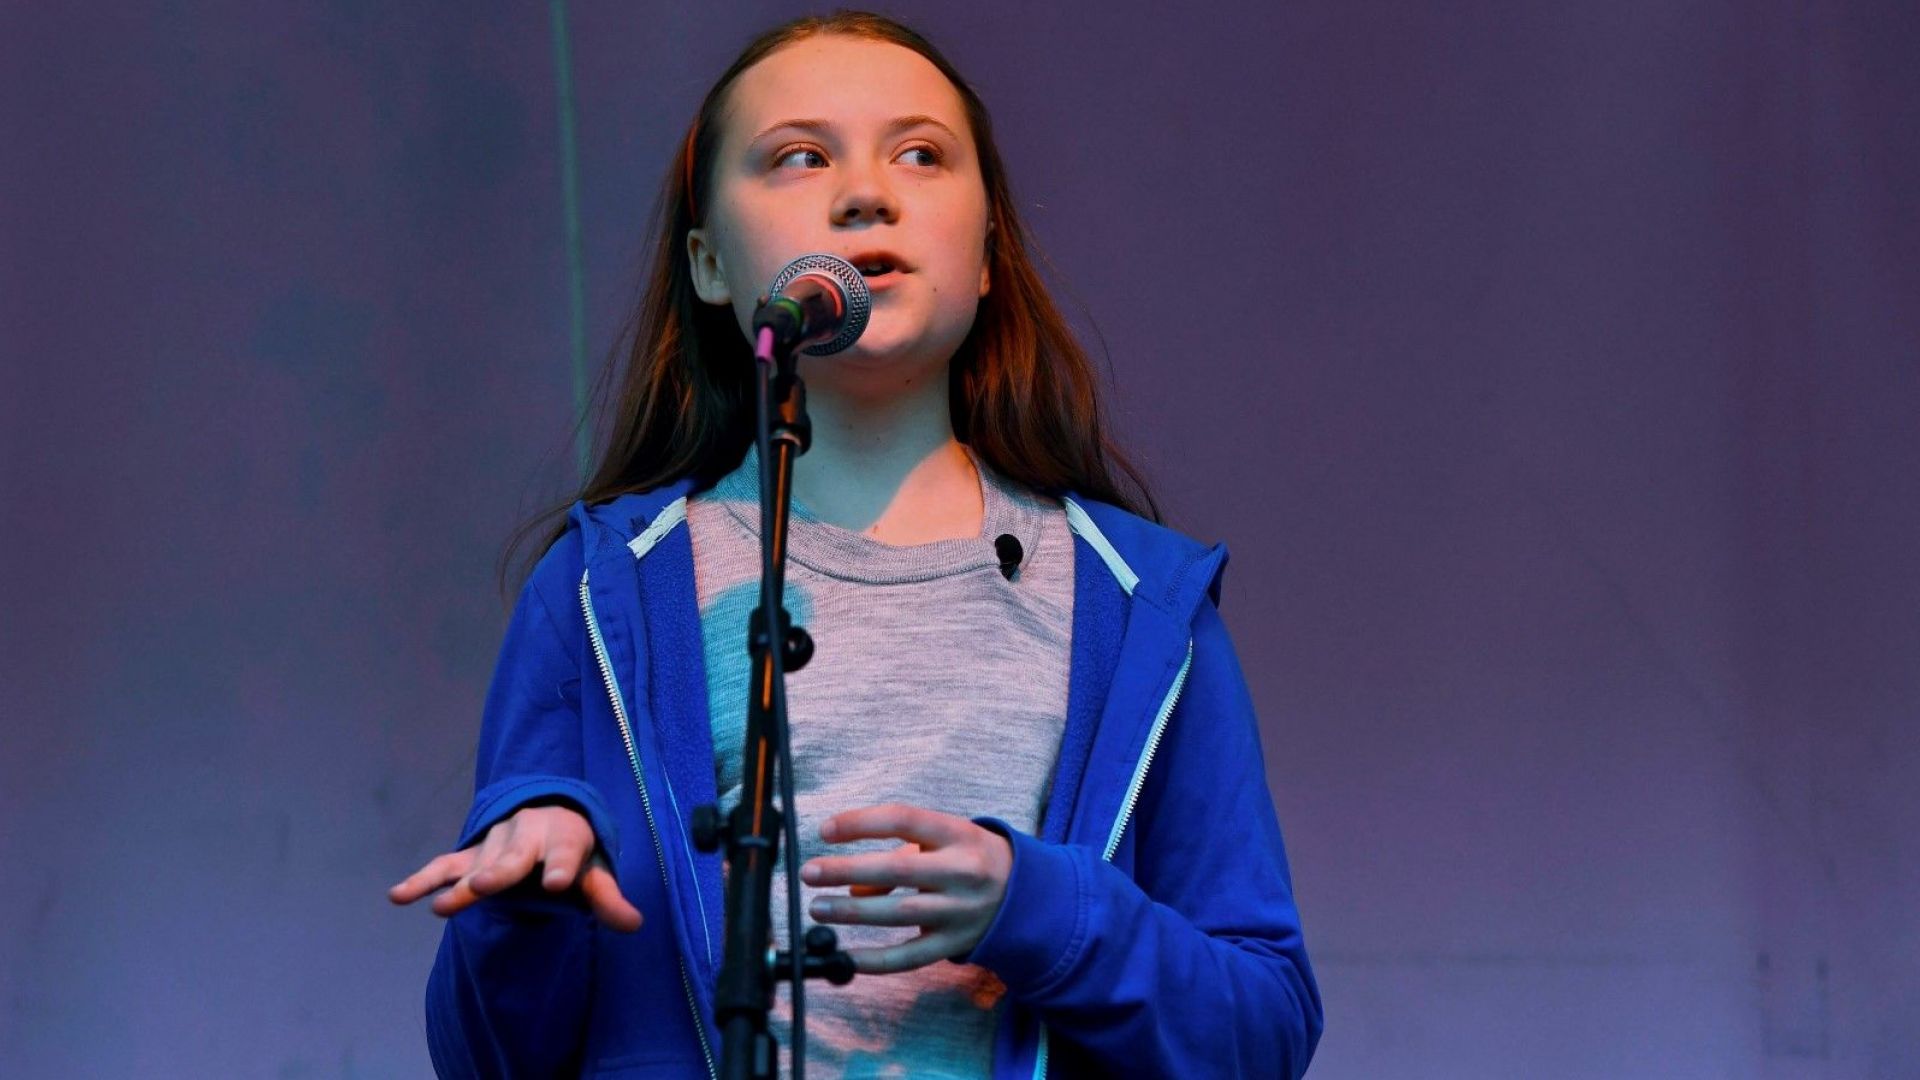 Младата екоактивистка Грета Тунберг стана поредната публична личност която призова